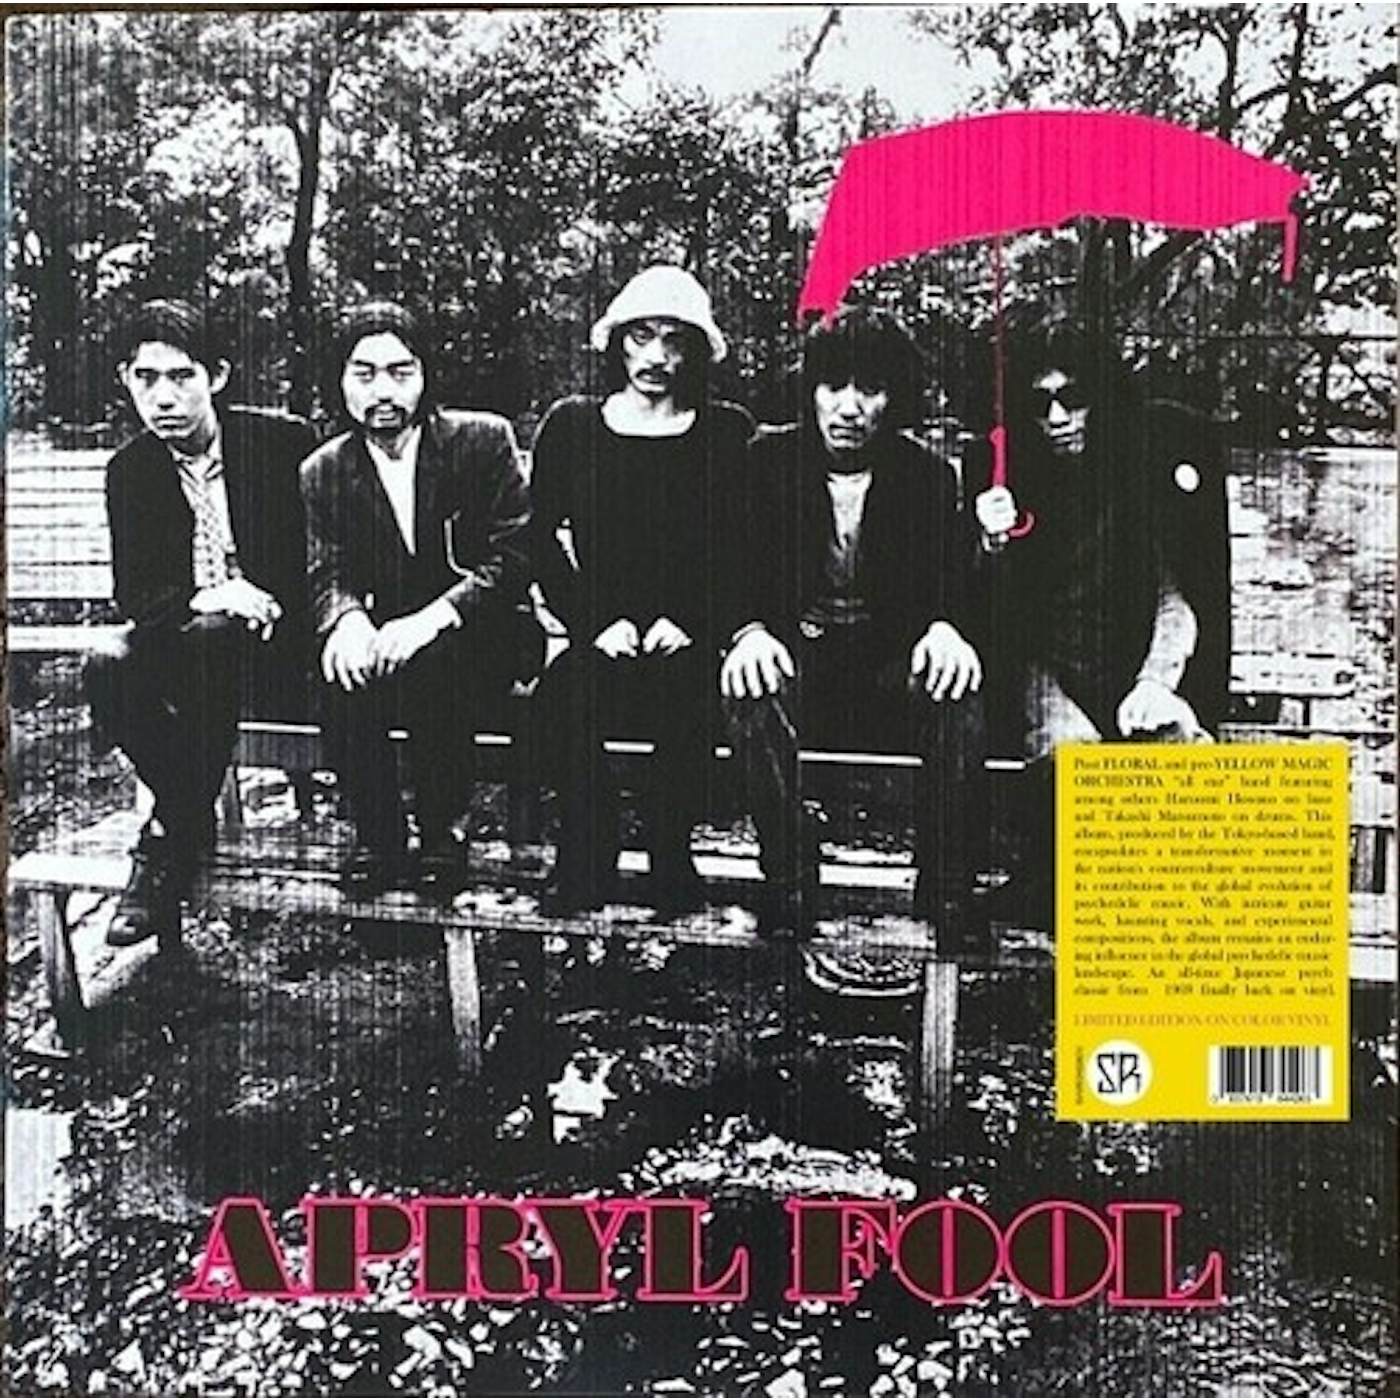 The Apryl Fool Vinyl Record